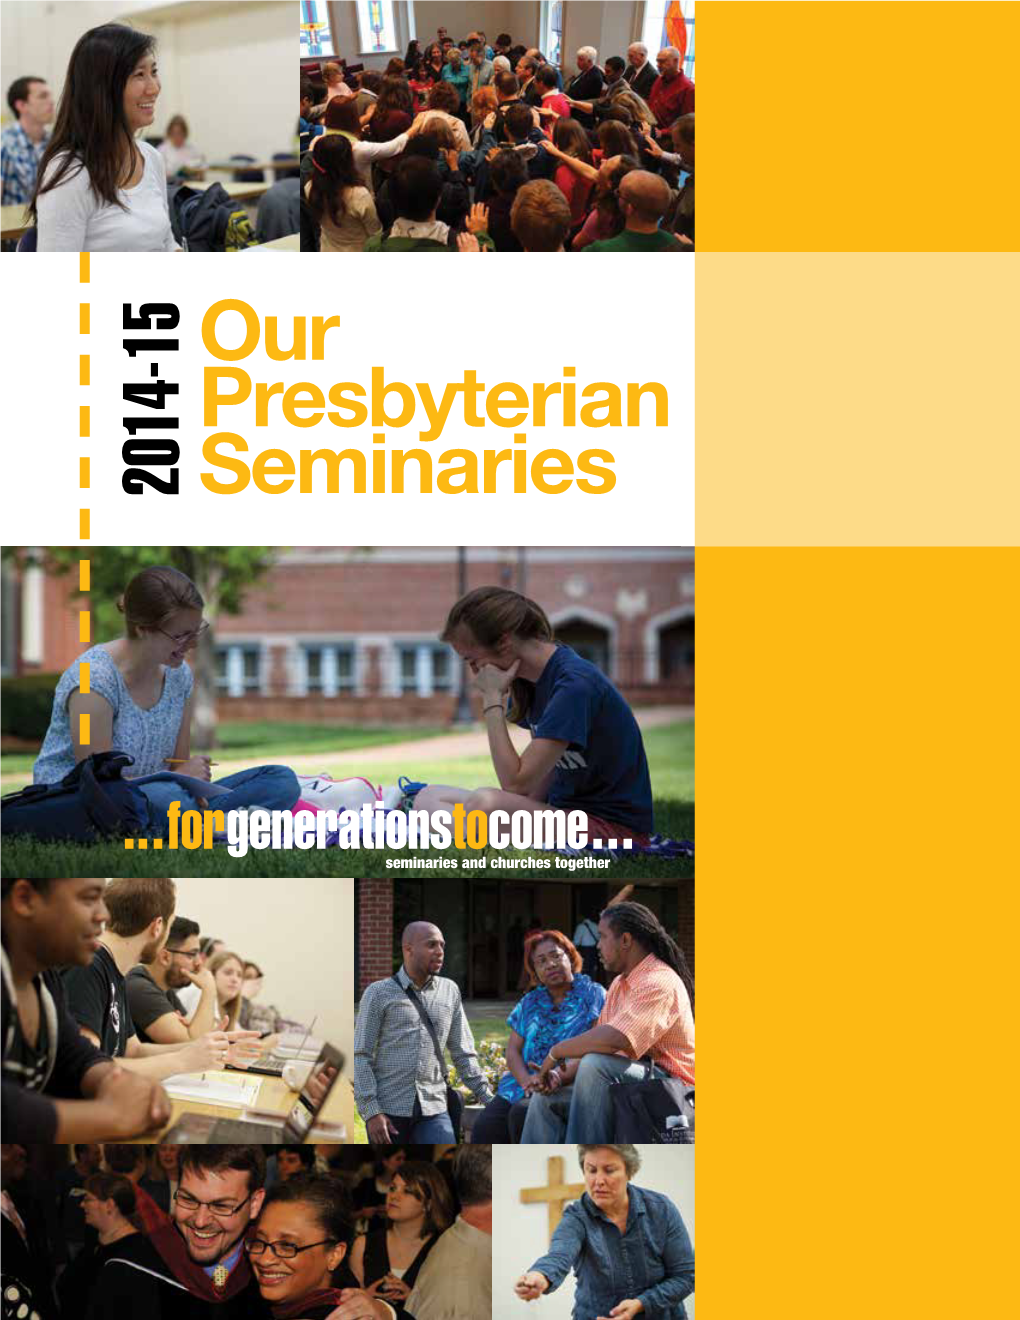 Our Presbyterian Seminaries